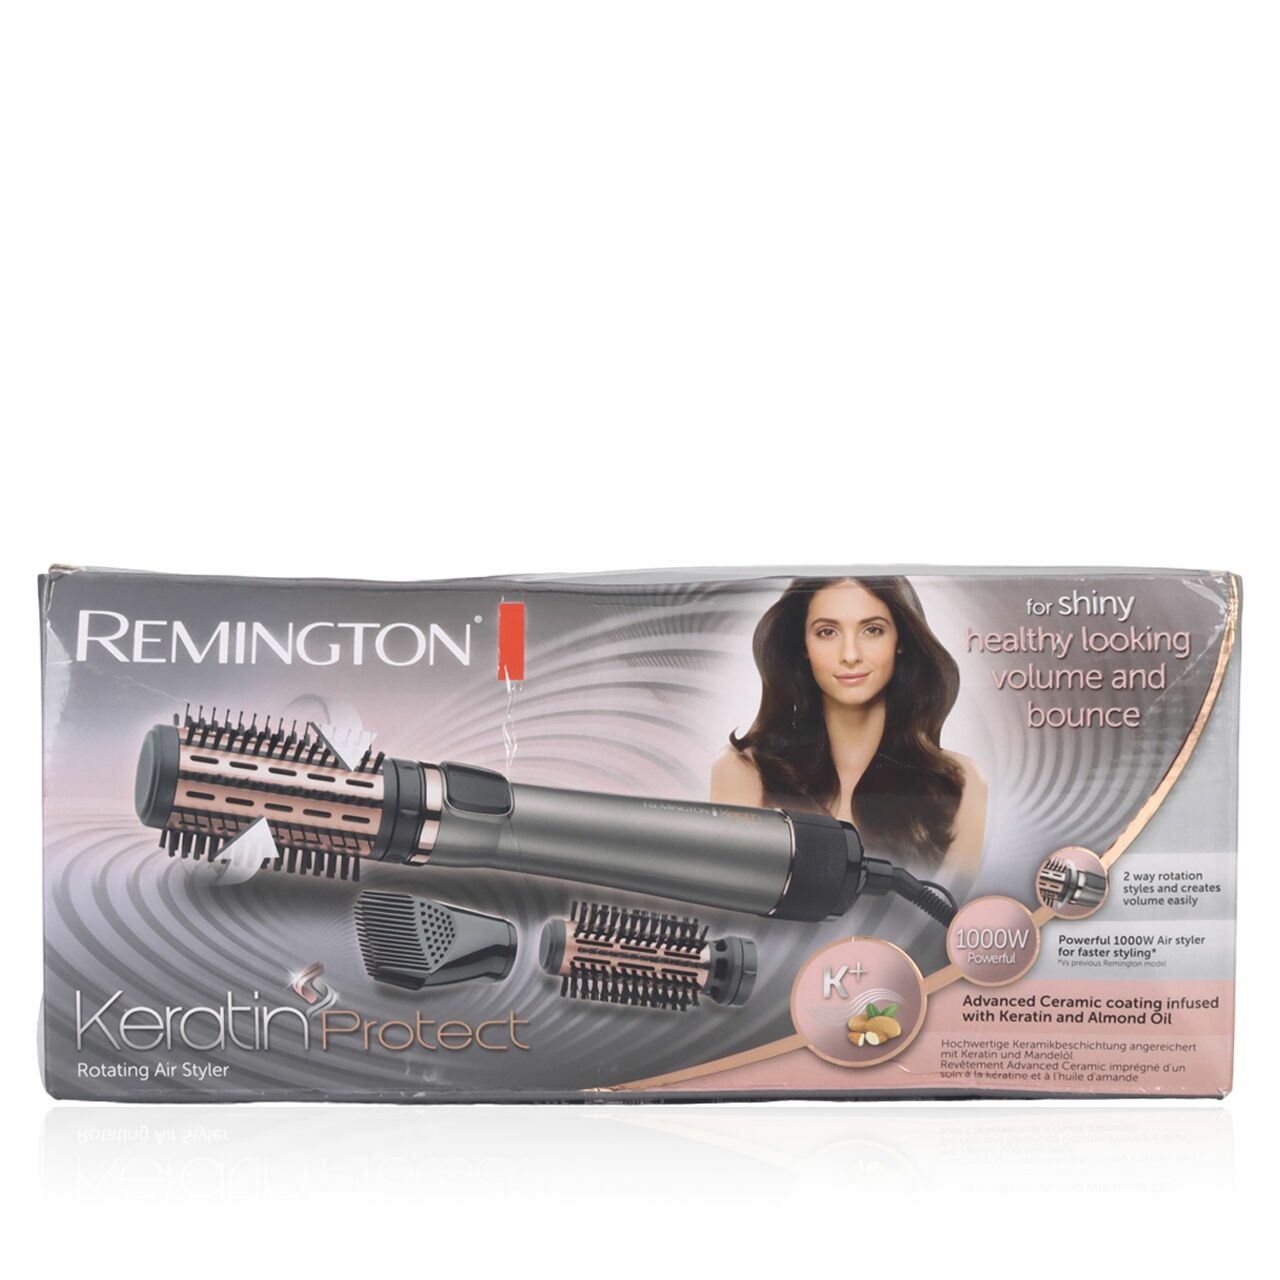 Remington Keratin Protect Rotating Air Styler